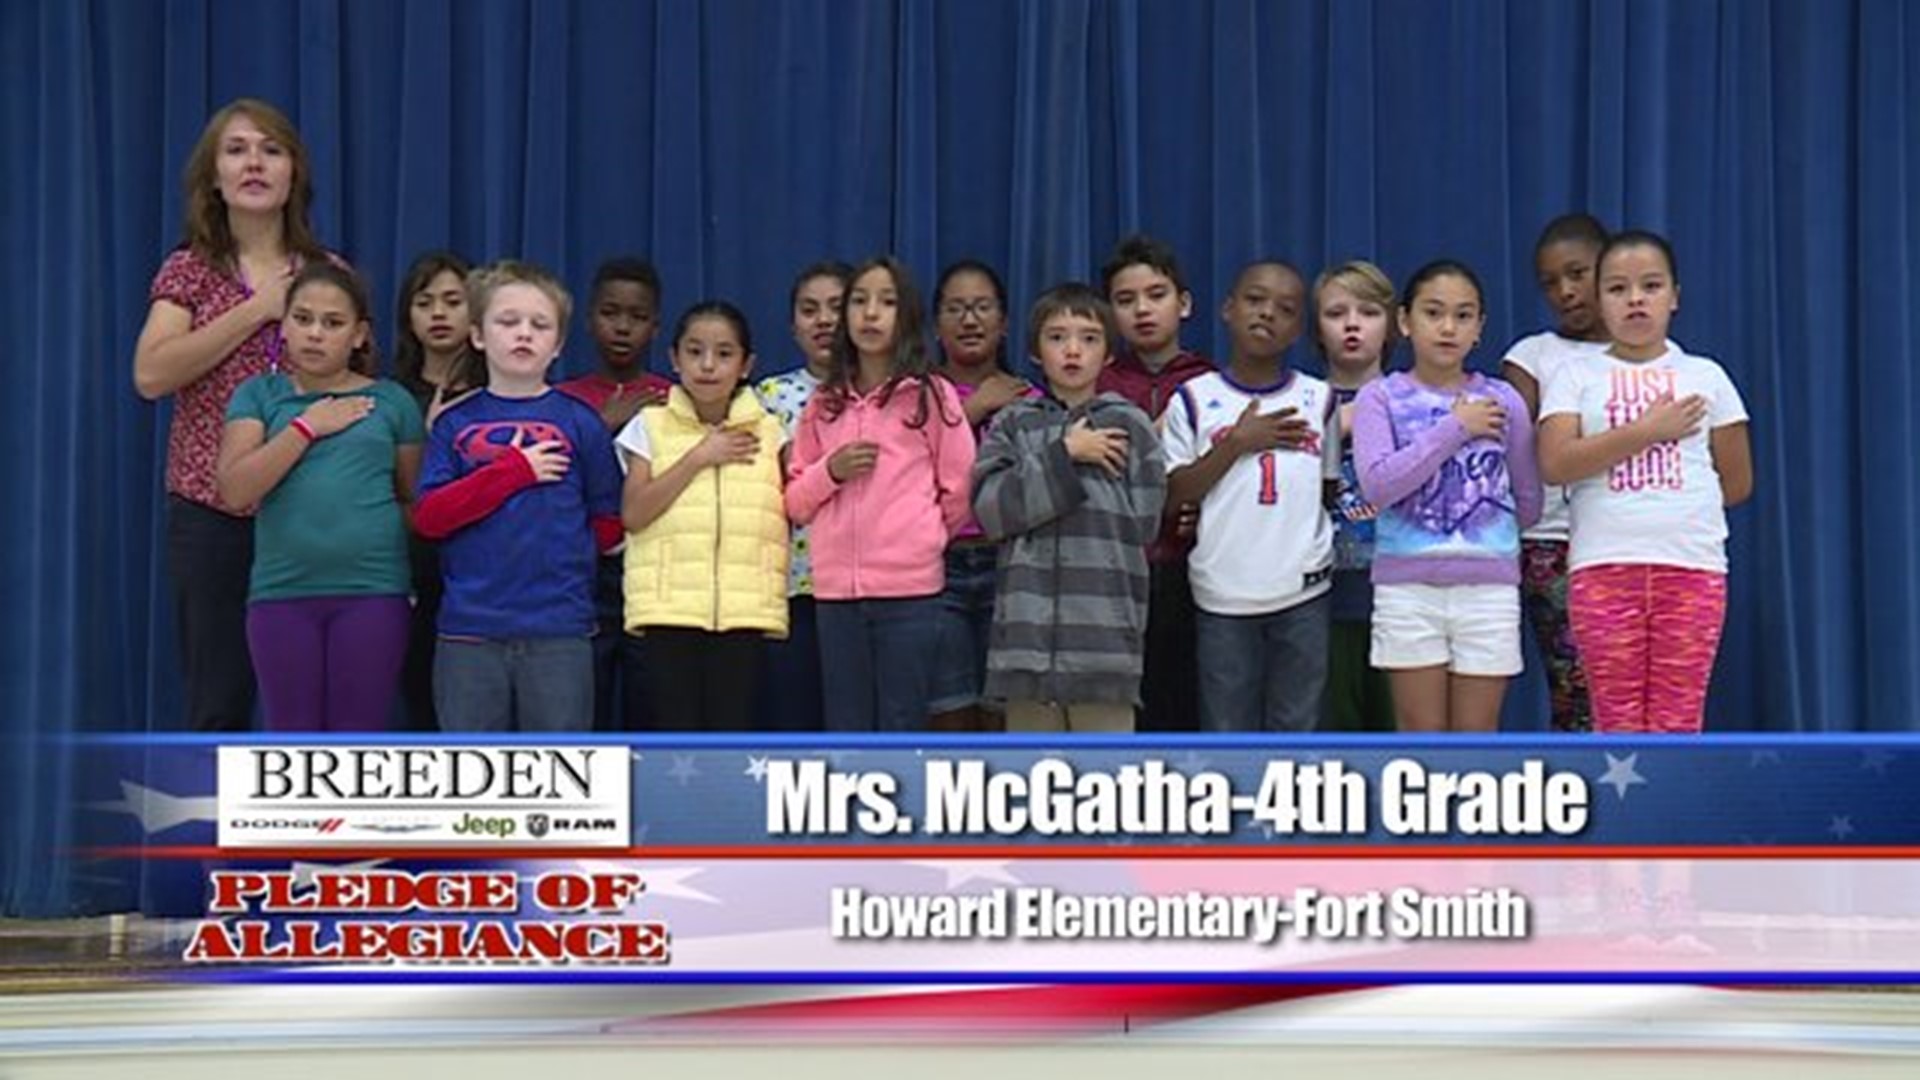 Howard Elementary, Fort Smith - Mrs. McGatha, 4th Grade